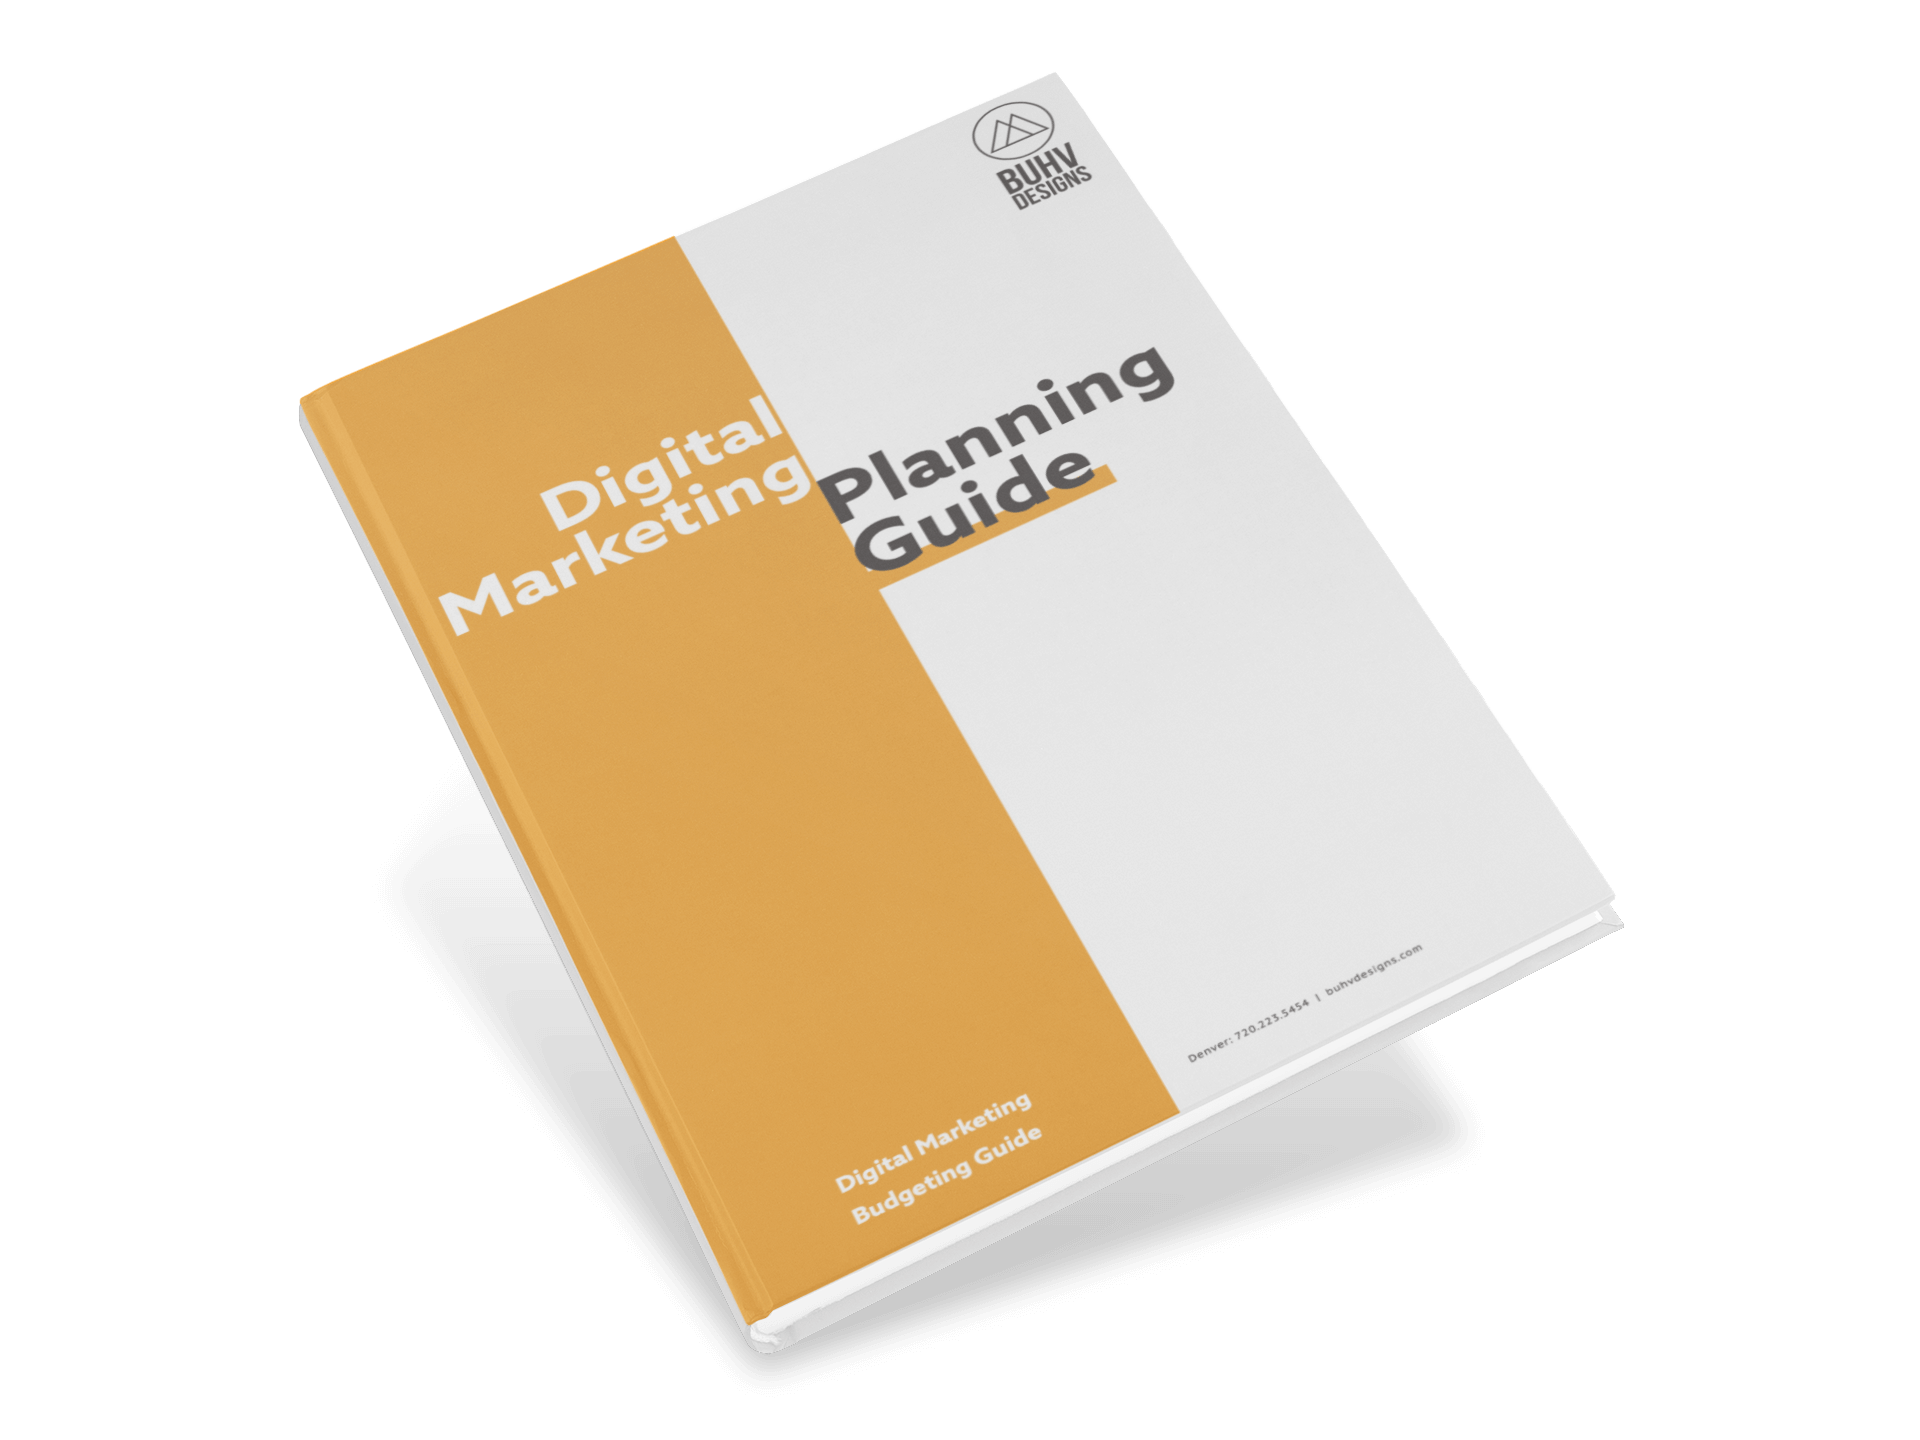 BUHV Digital Marketing Planning Guide image